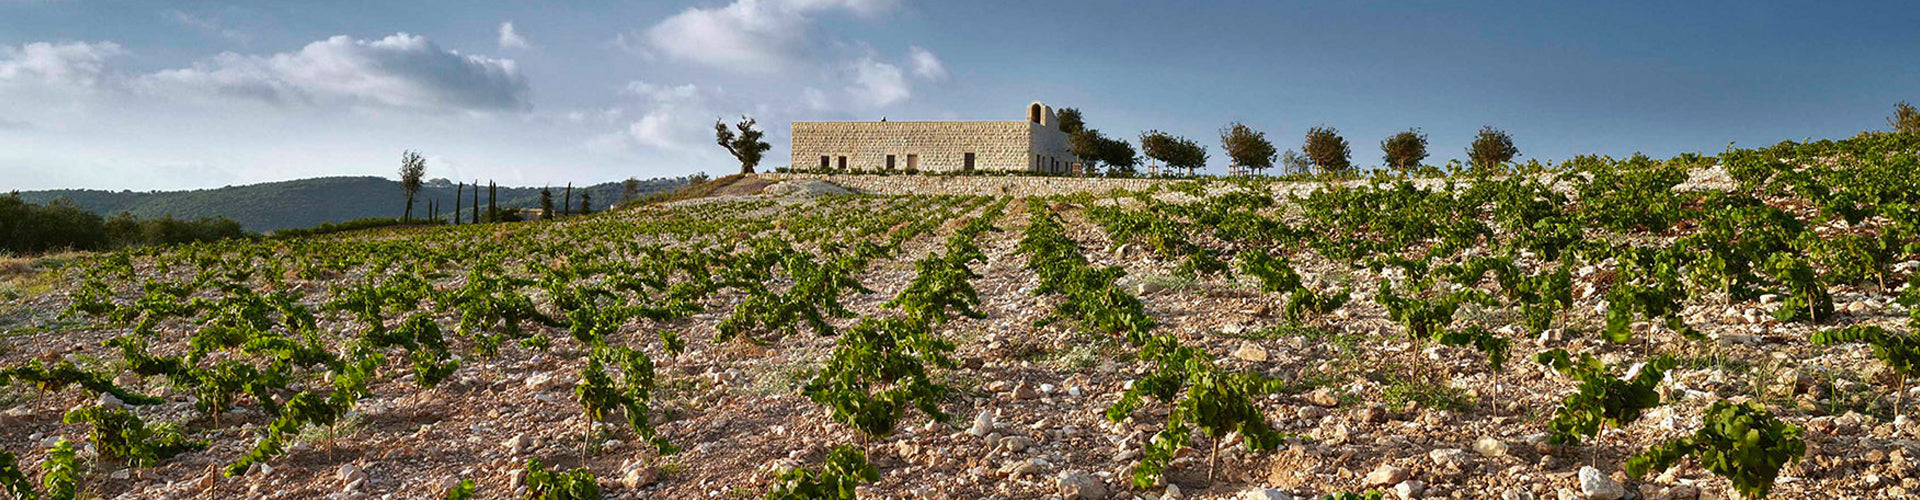 IXSIR Winery & Vineyards Batroun, Lebanon